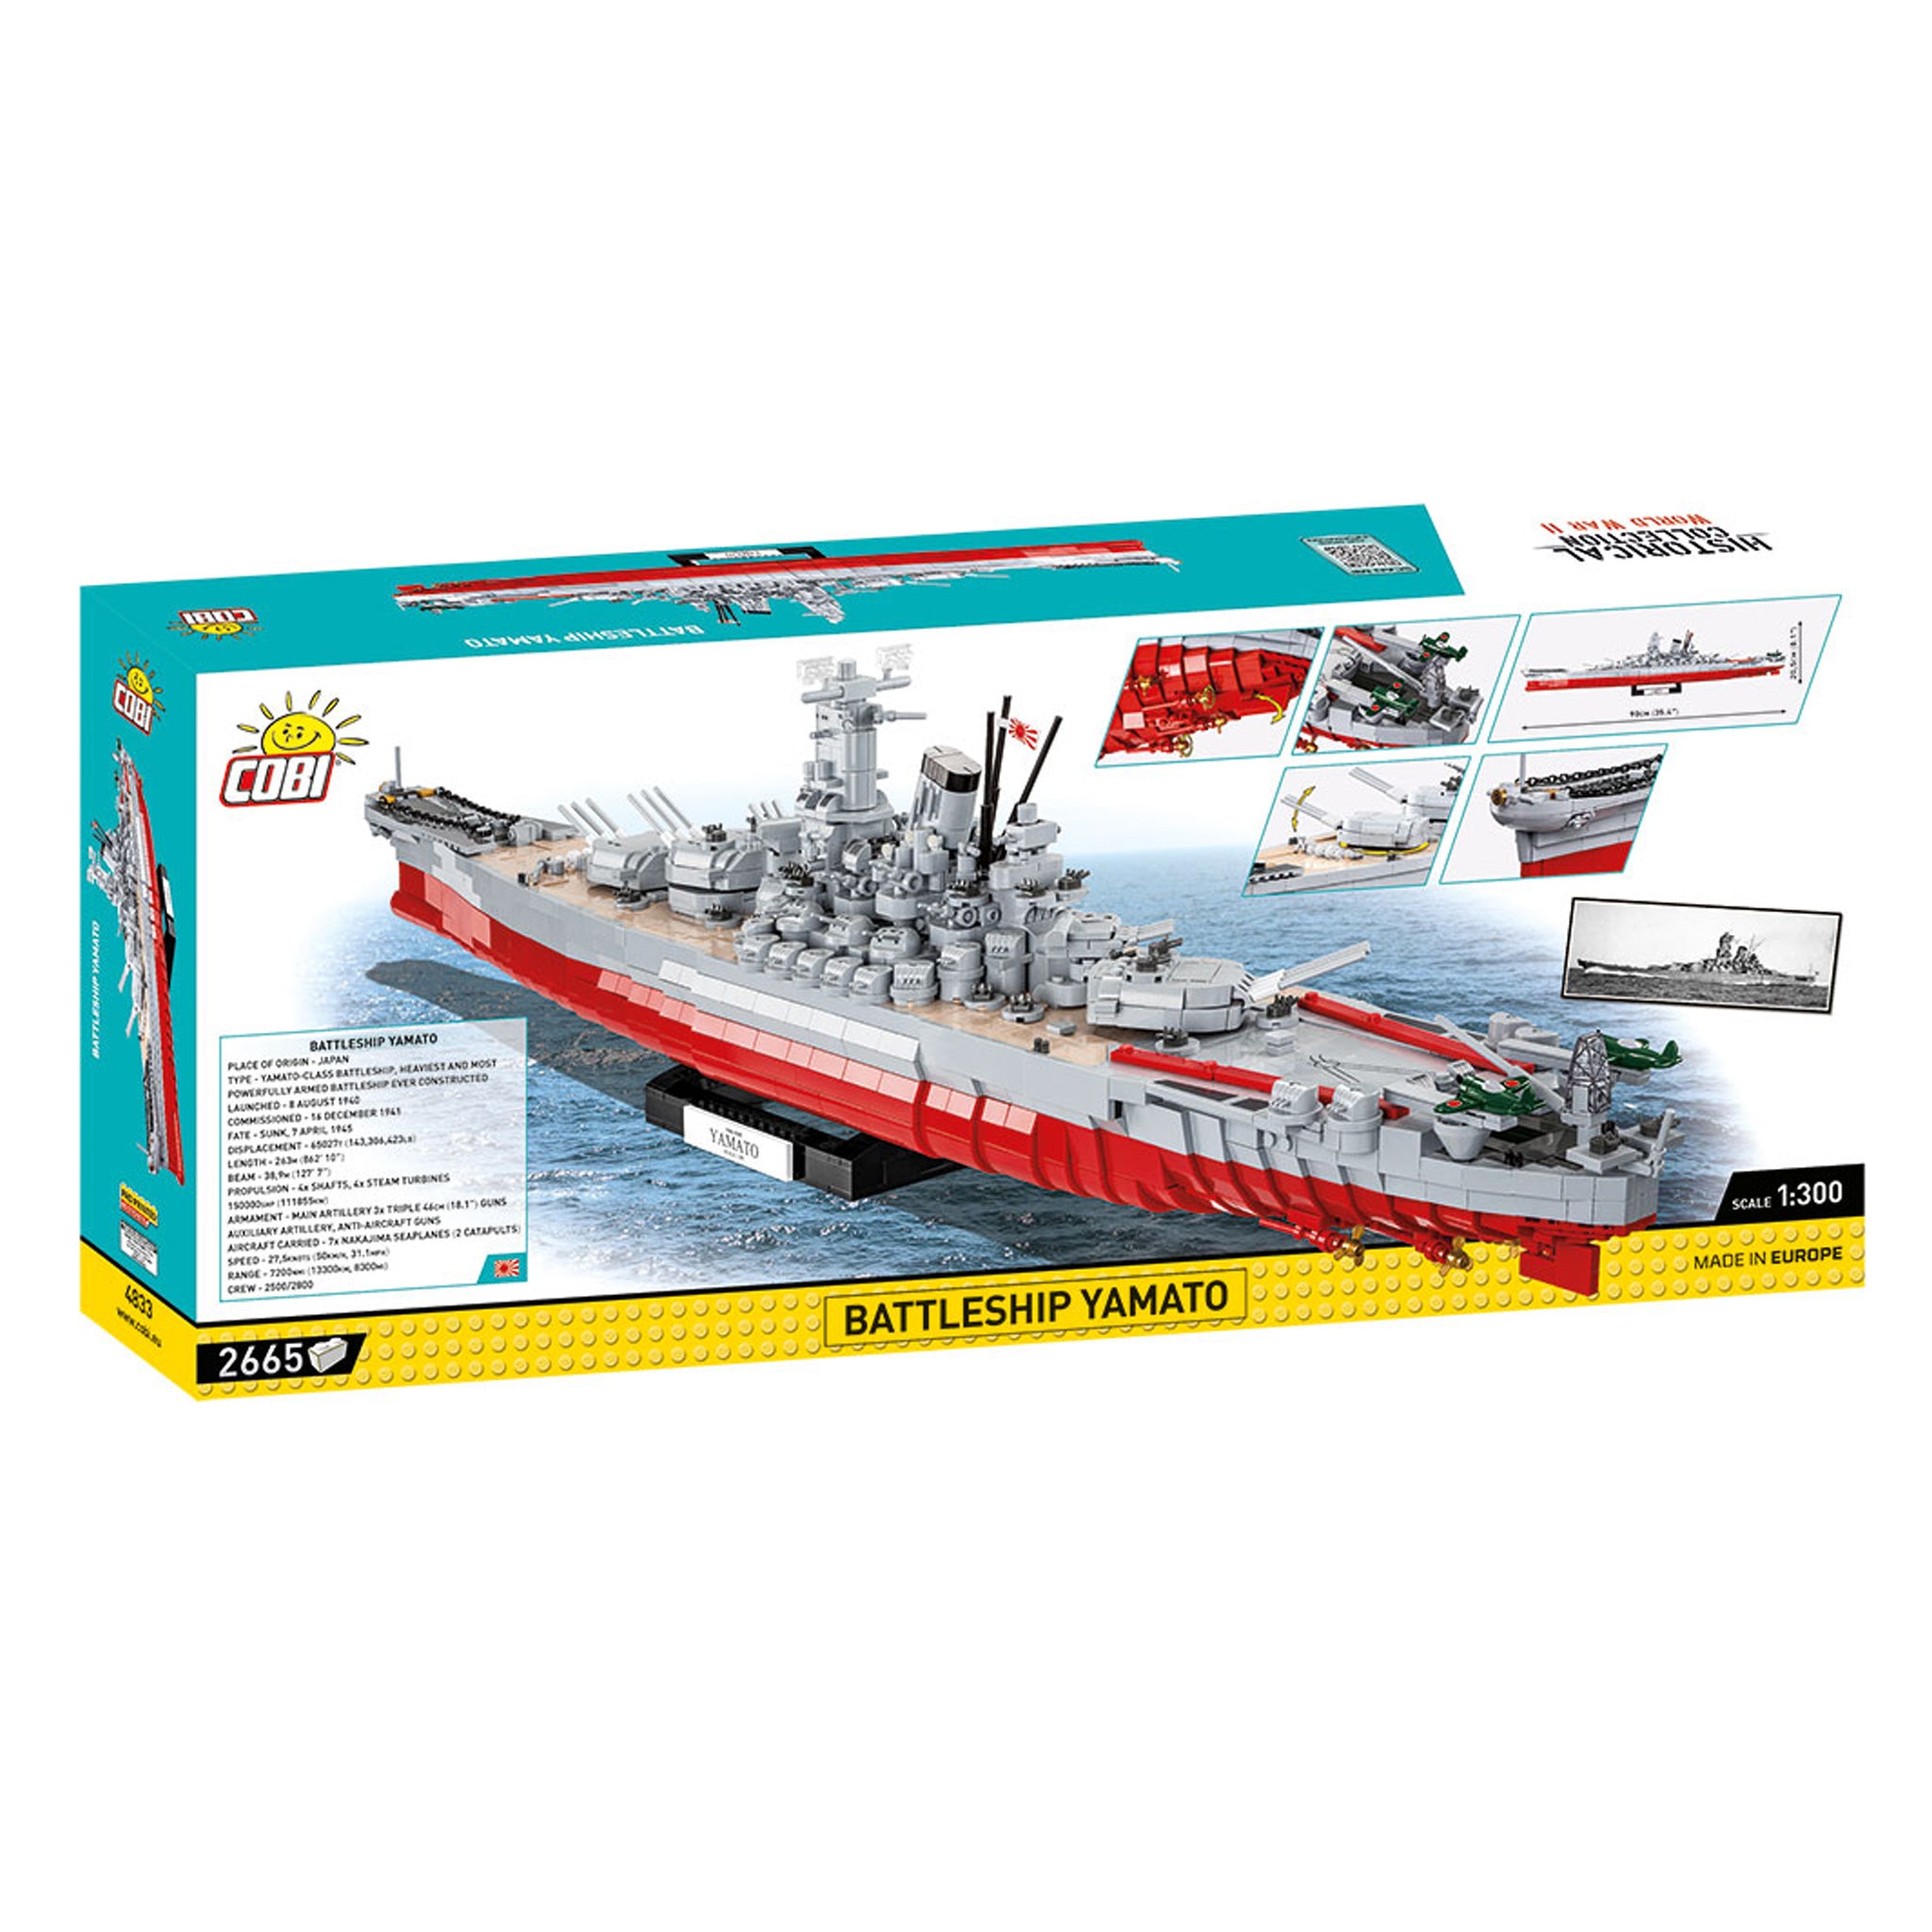 4833 - Battleship Yamato (Cobi)